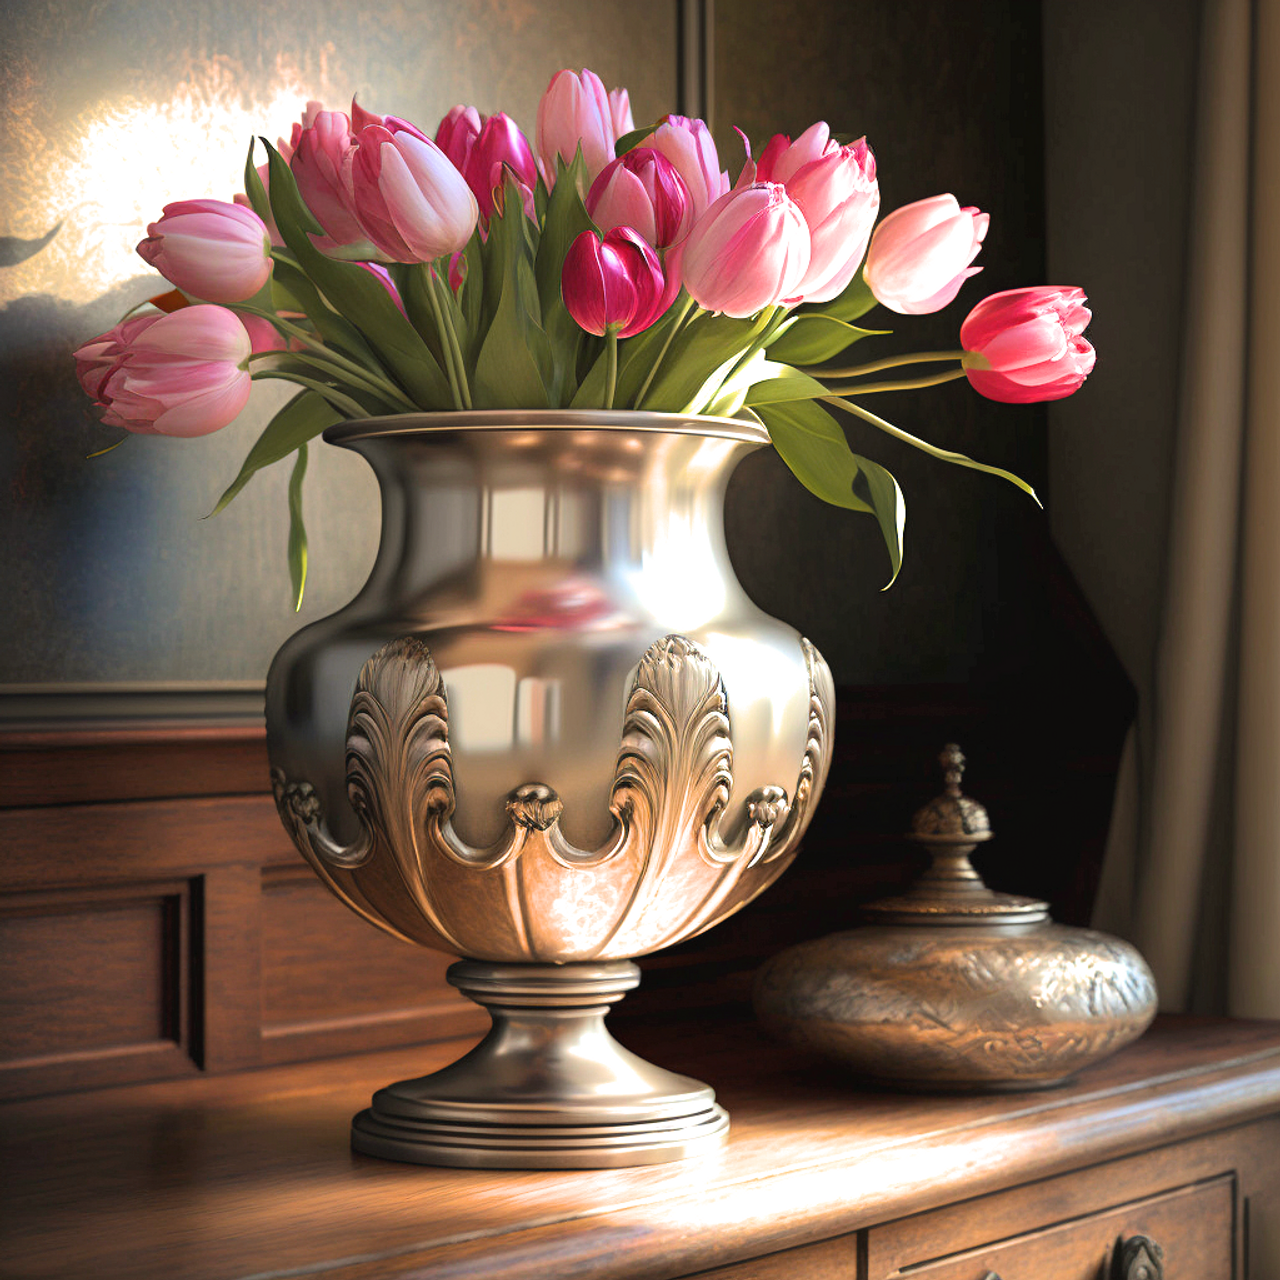 5D Diamond Painting Large Silver Vase Tulips Kit